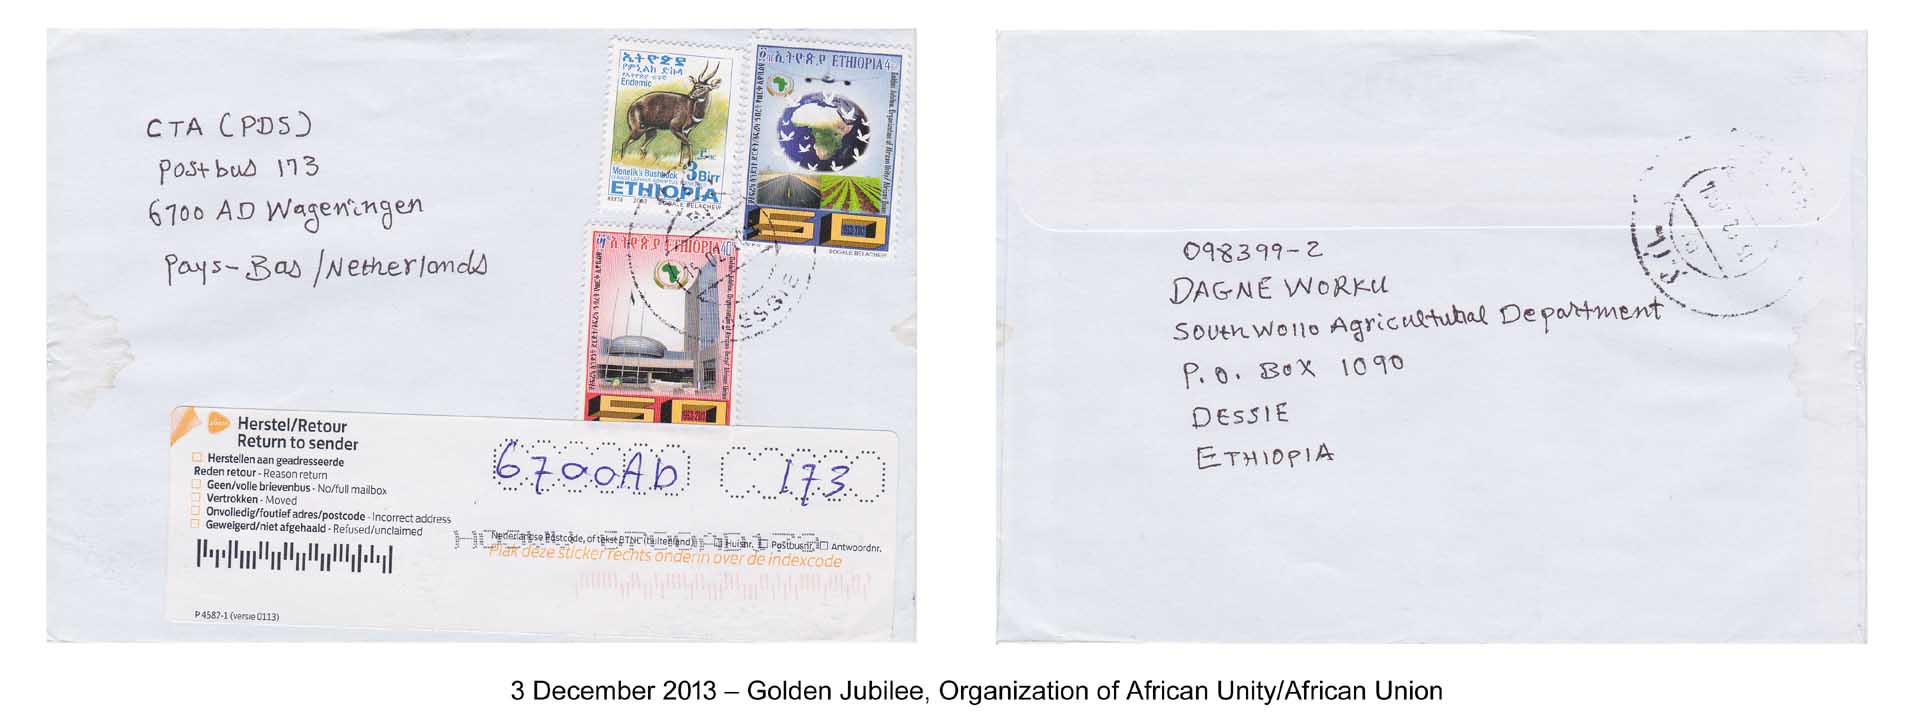 20131203 – Golden Jubilee, Organization of African Unity